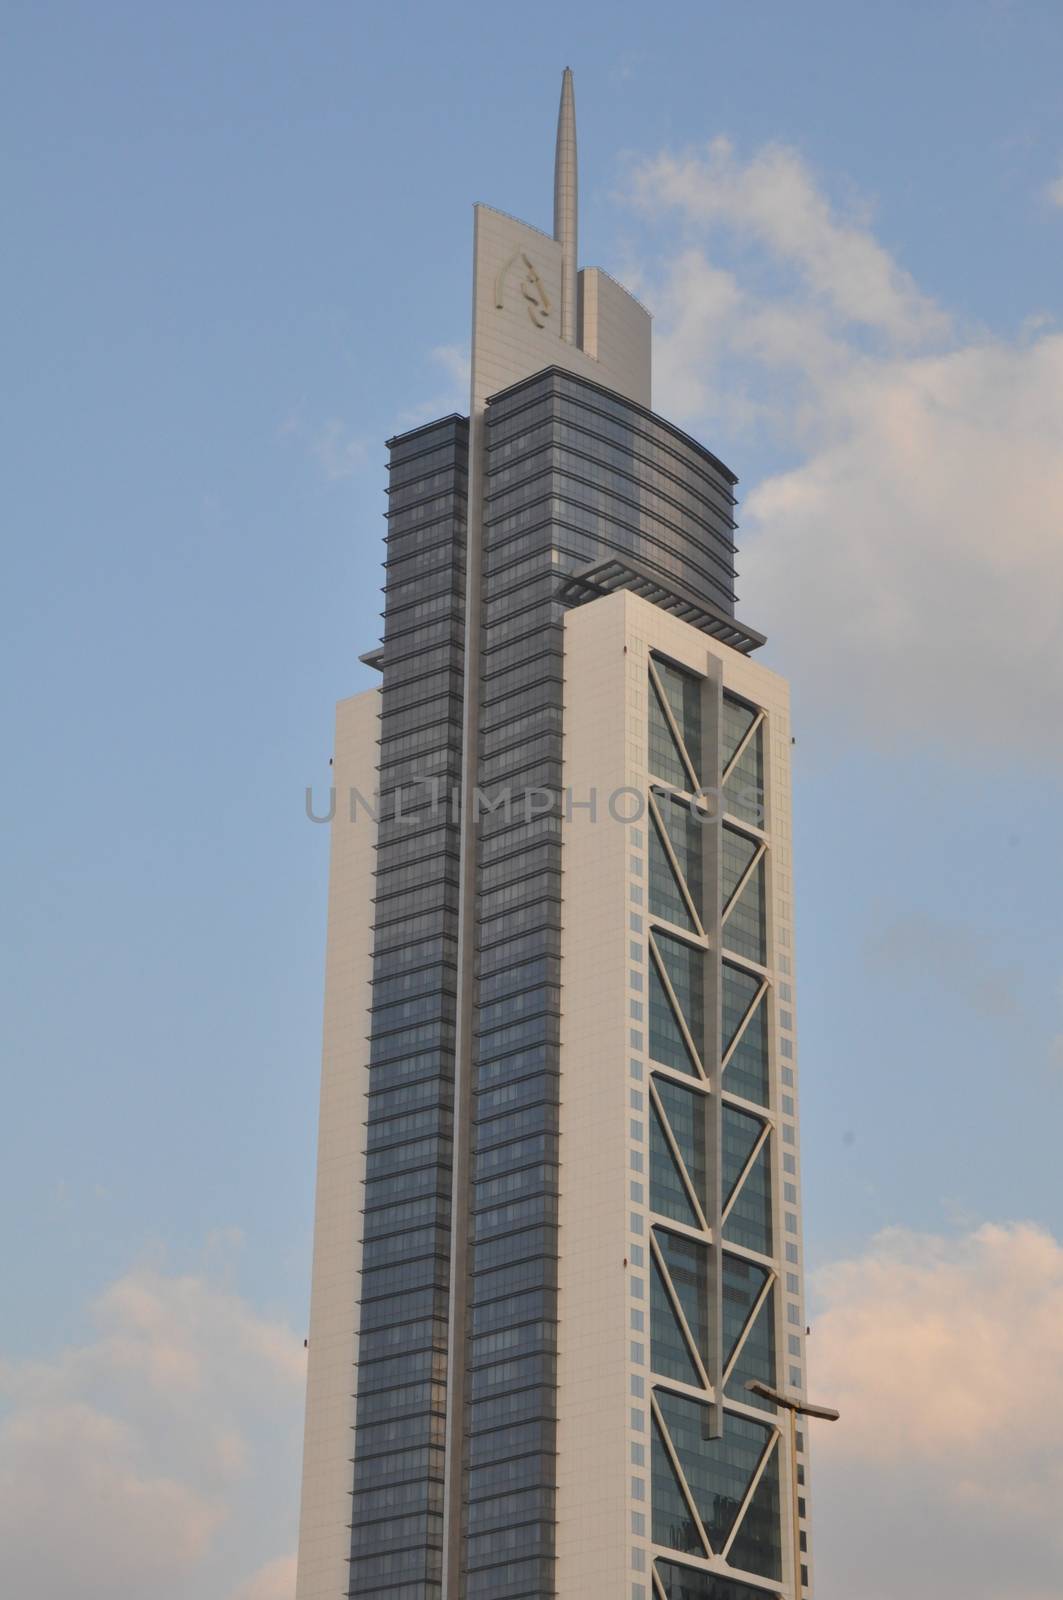 Millennium Tower on Sheikh Zayed Road in Dubai, UAE by sainaniritu